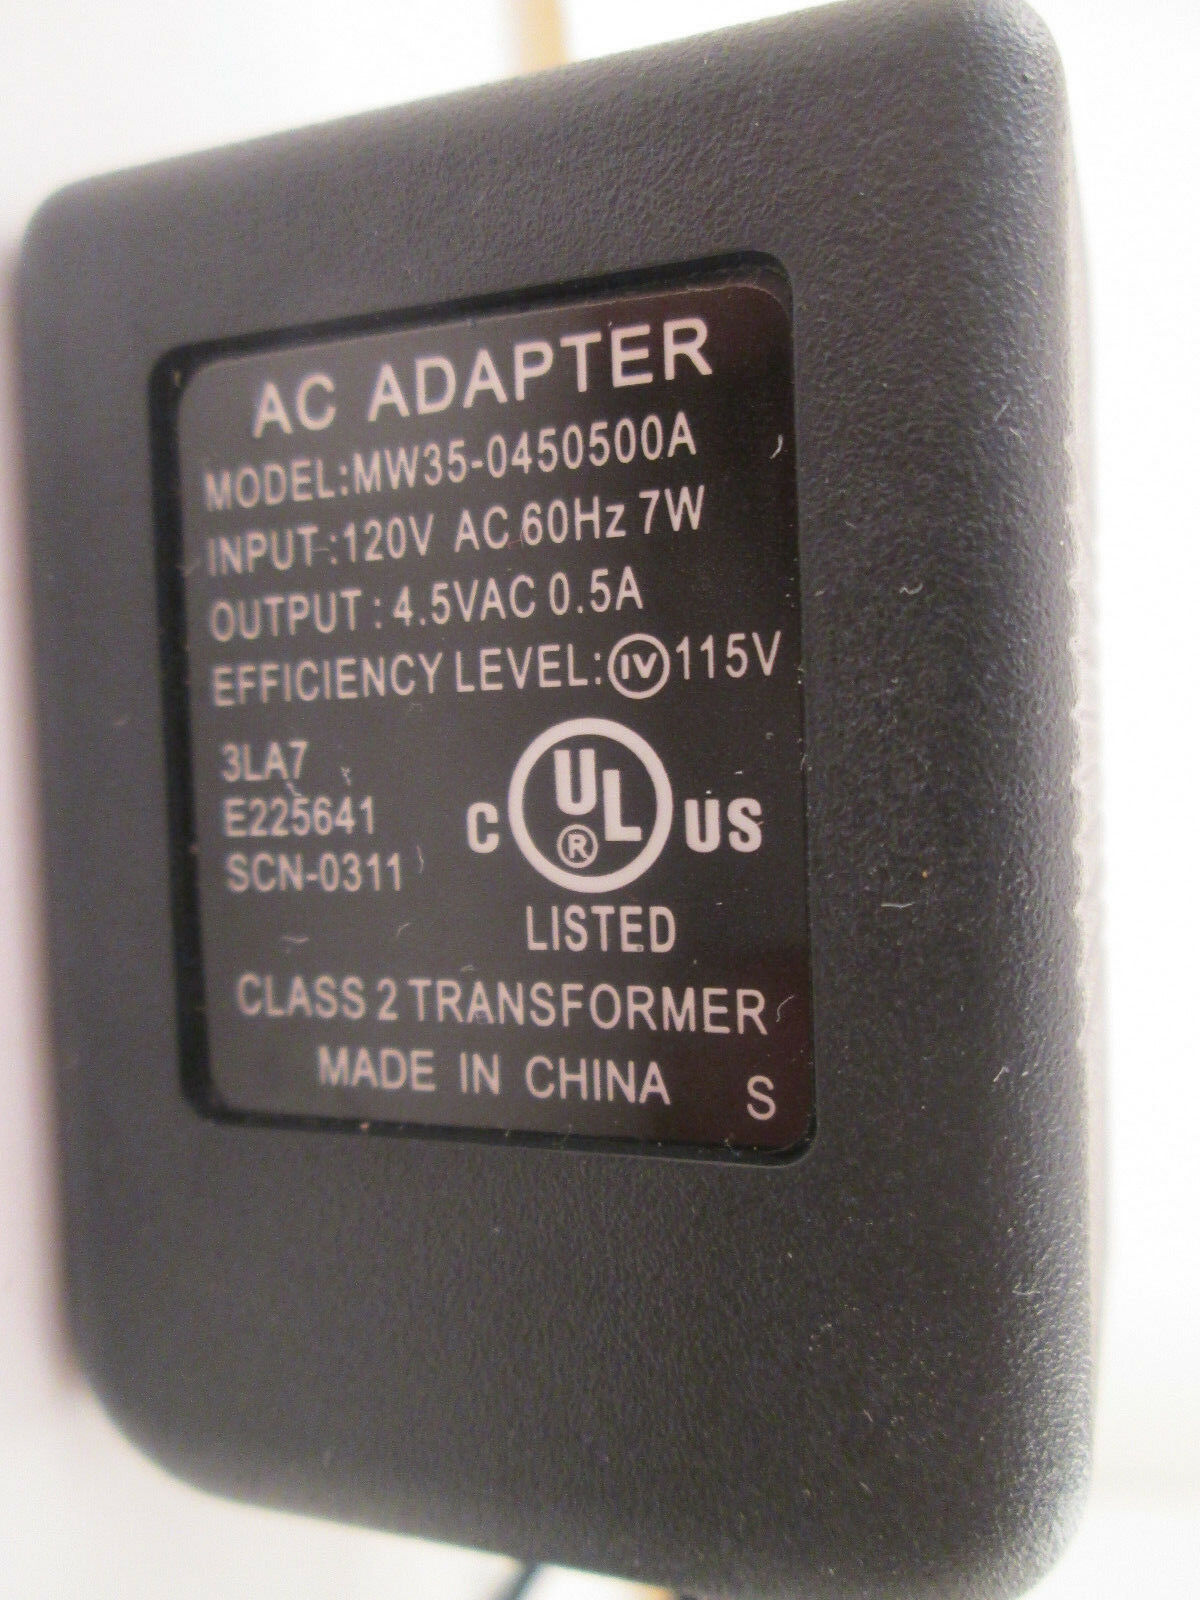 New 4.5V 0.5A MW35-0450500A Class 2 Transformer Ac Adapter